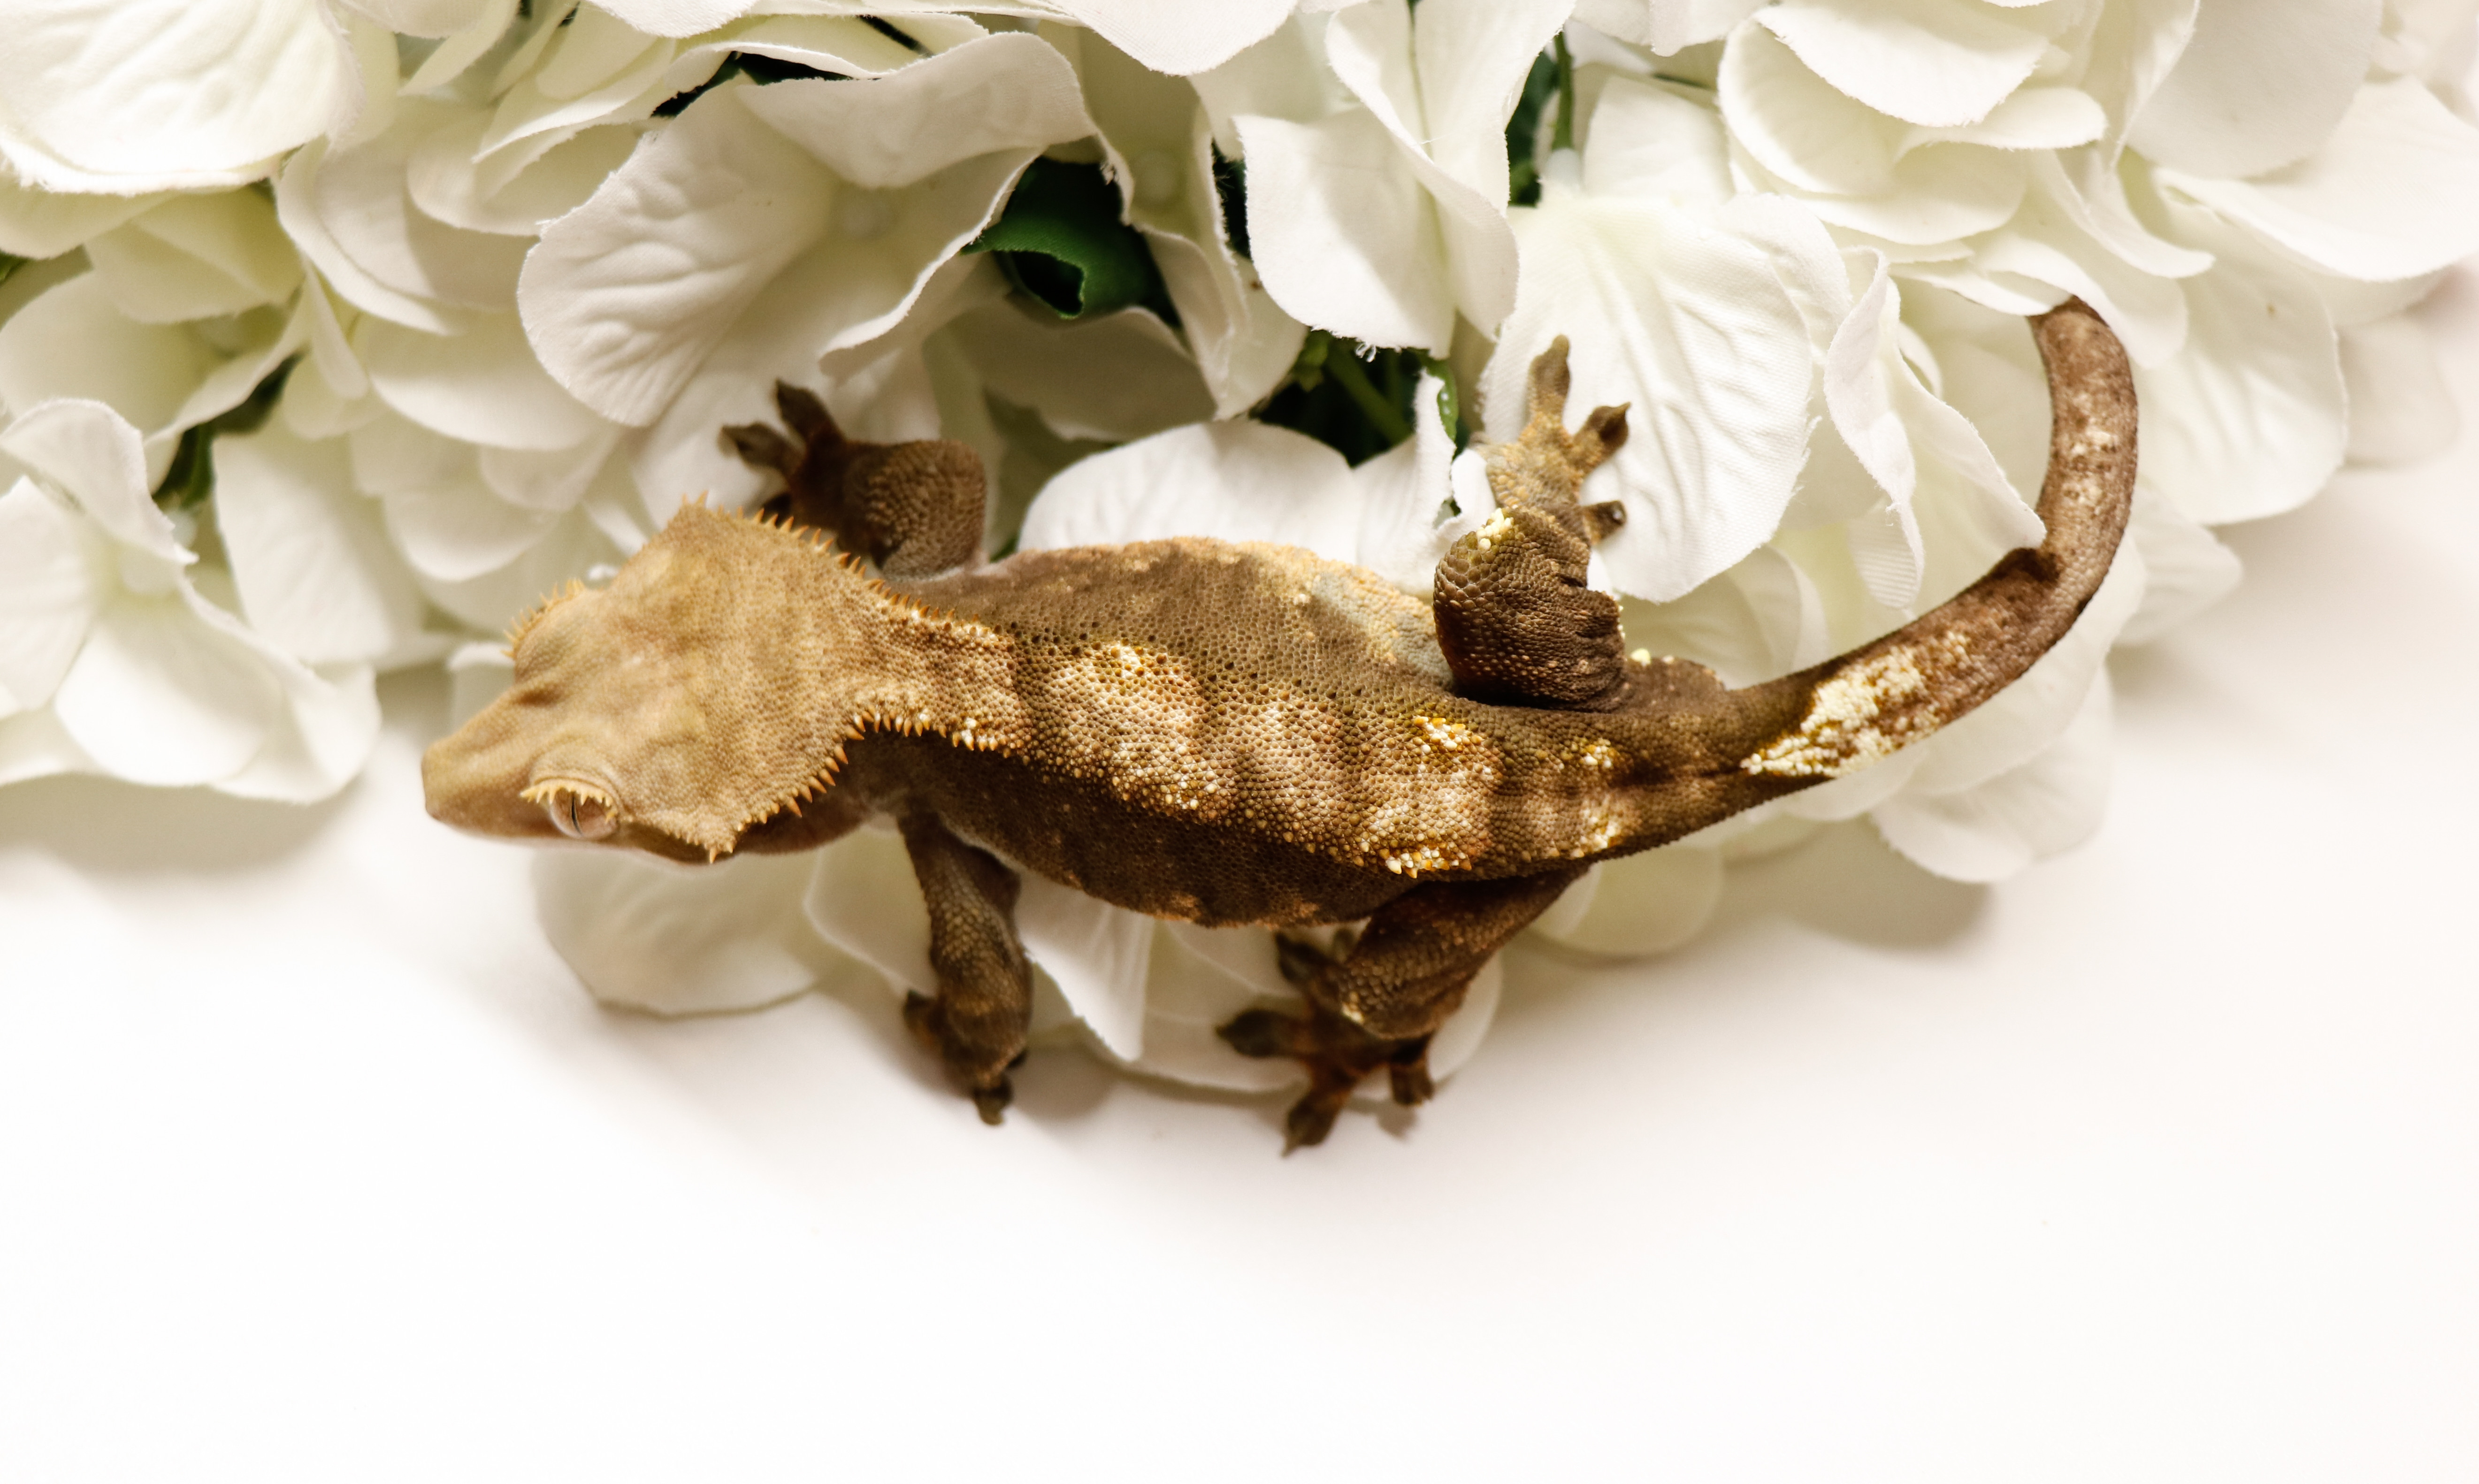 Harlequin Crested Gecko by KBK Reptiles